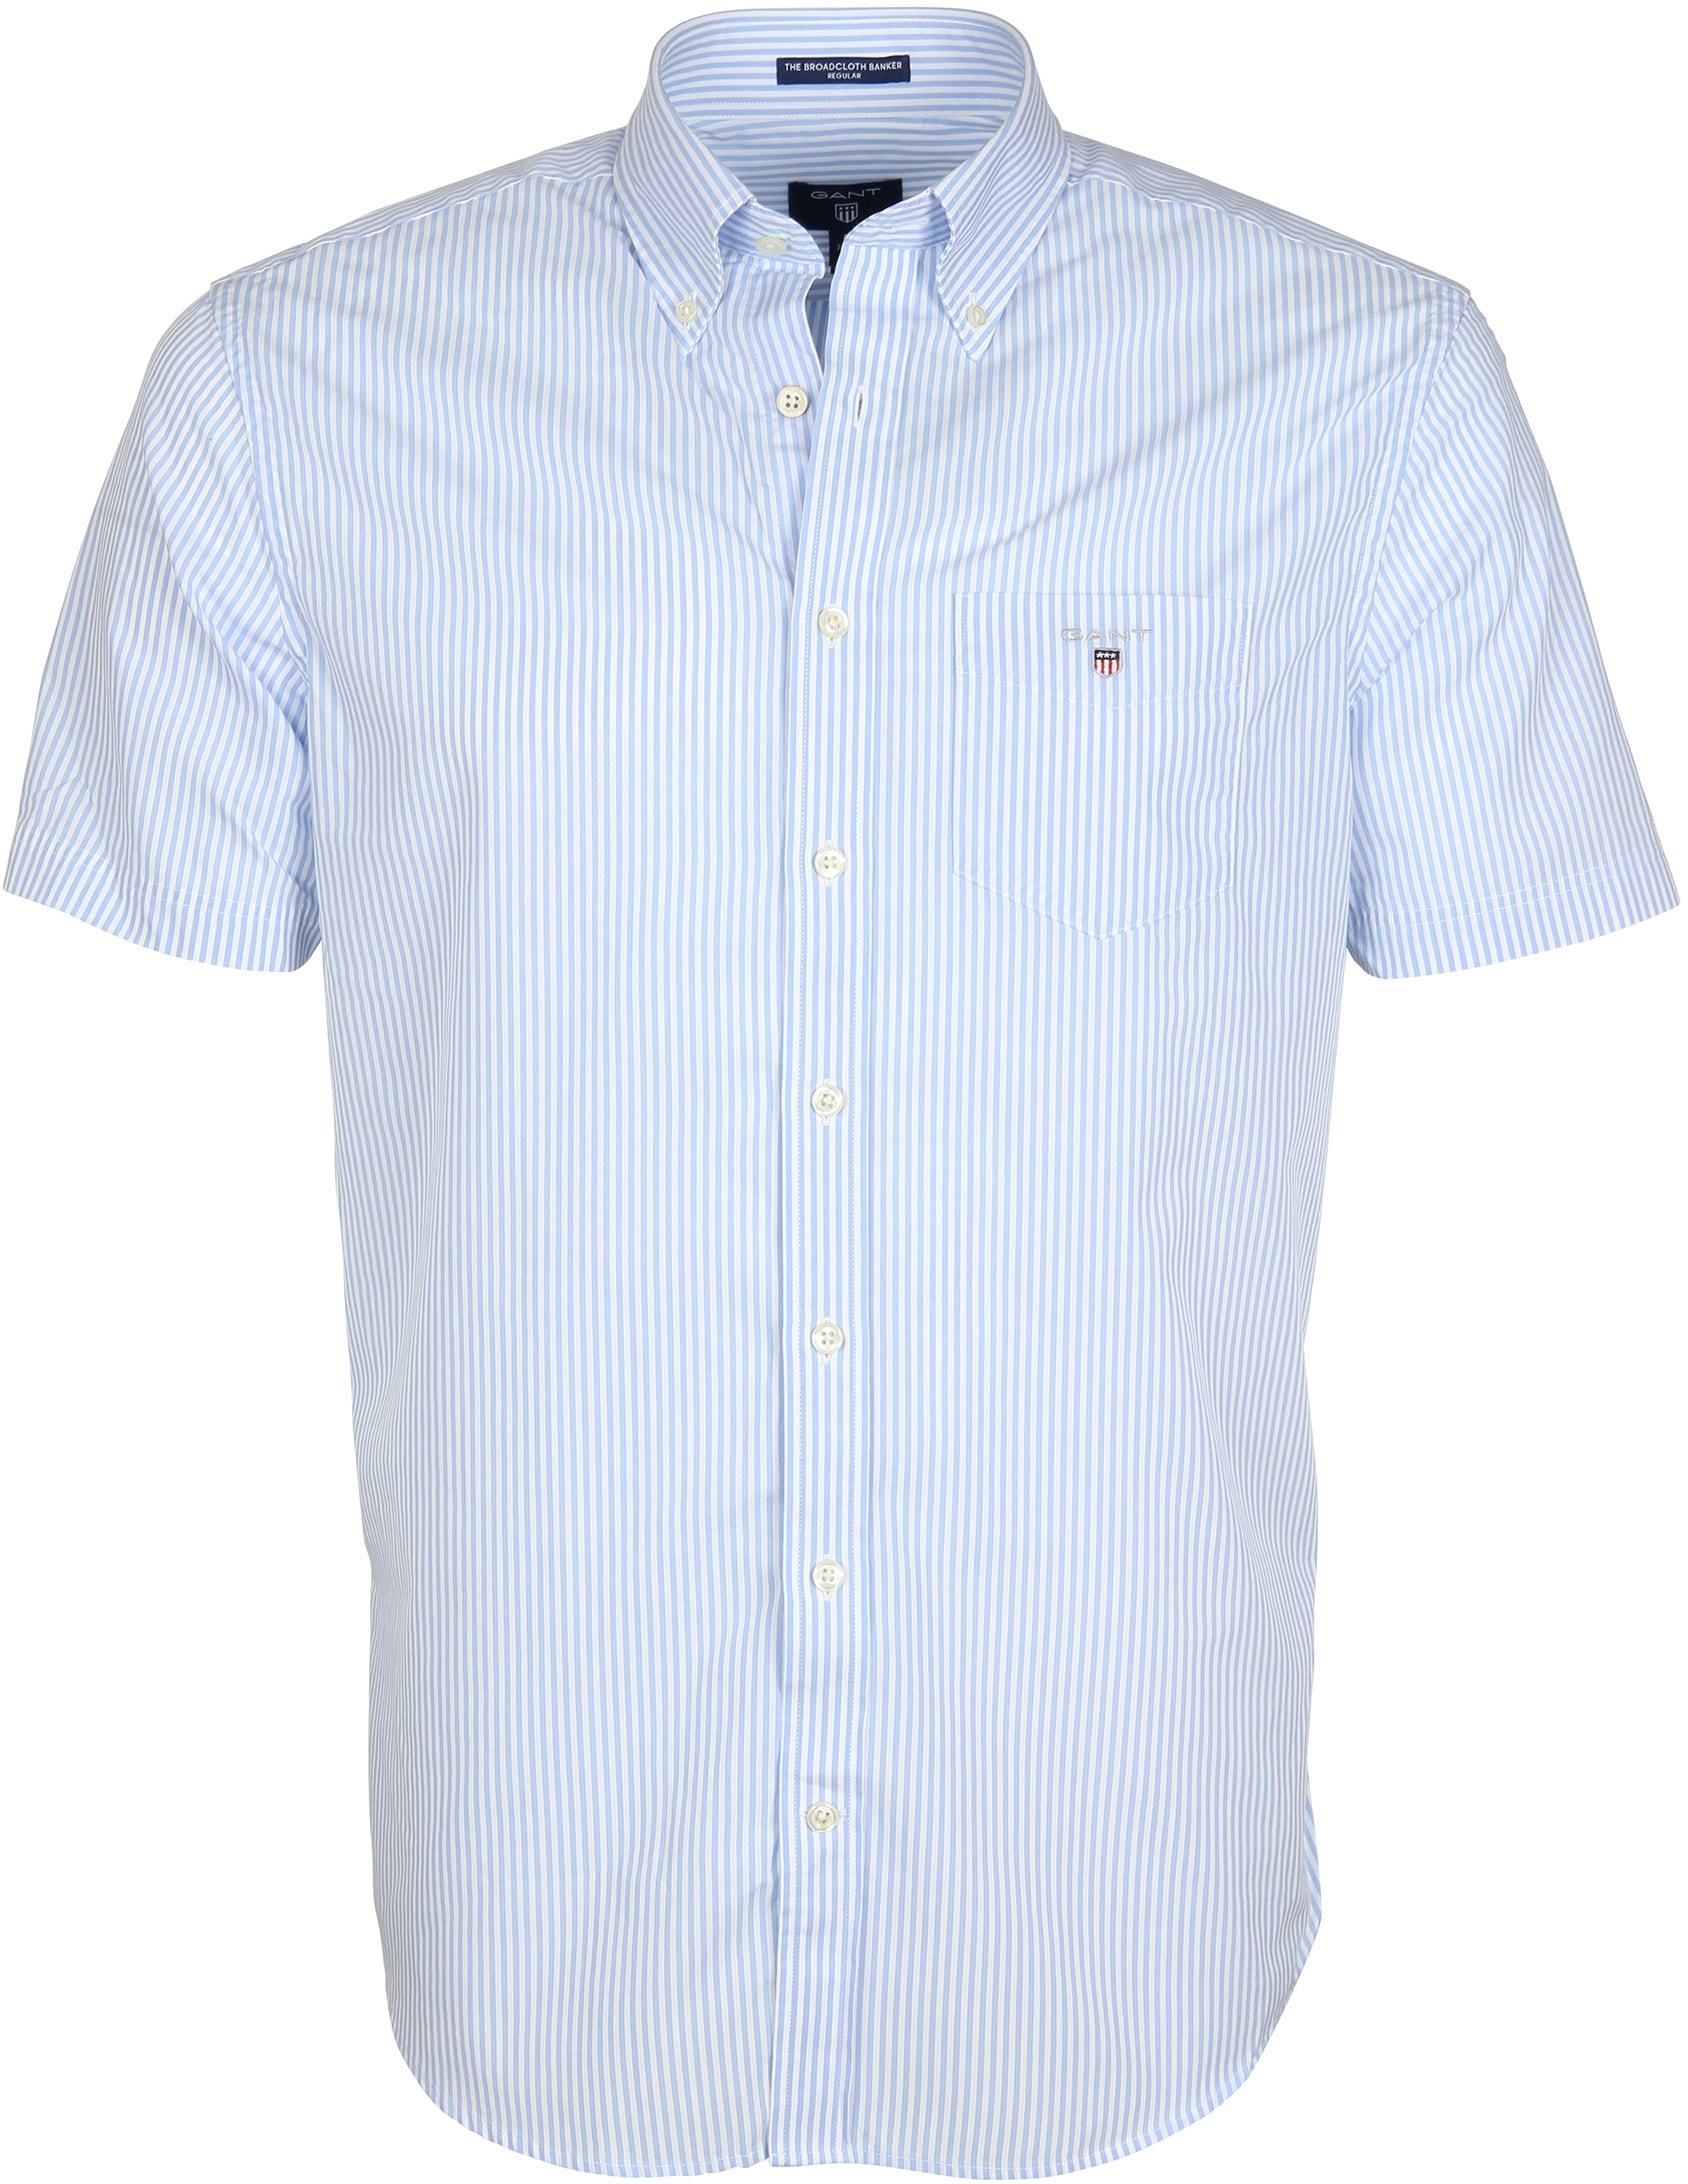 Gant Shirt Stripes Blue size M